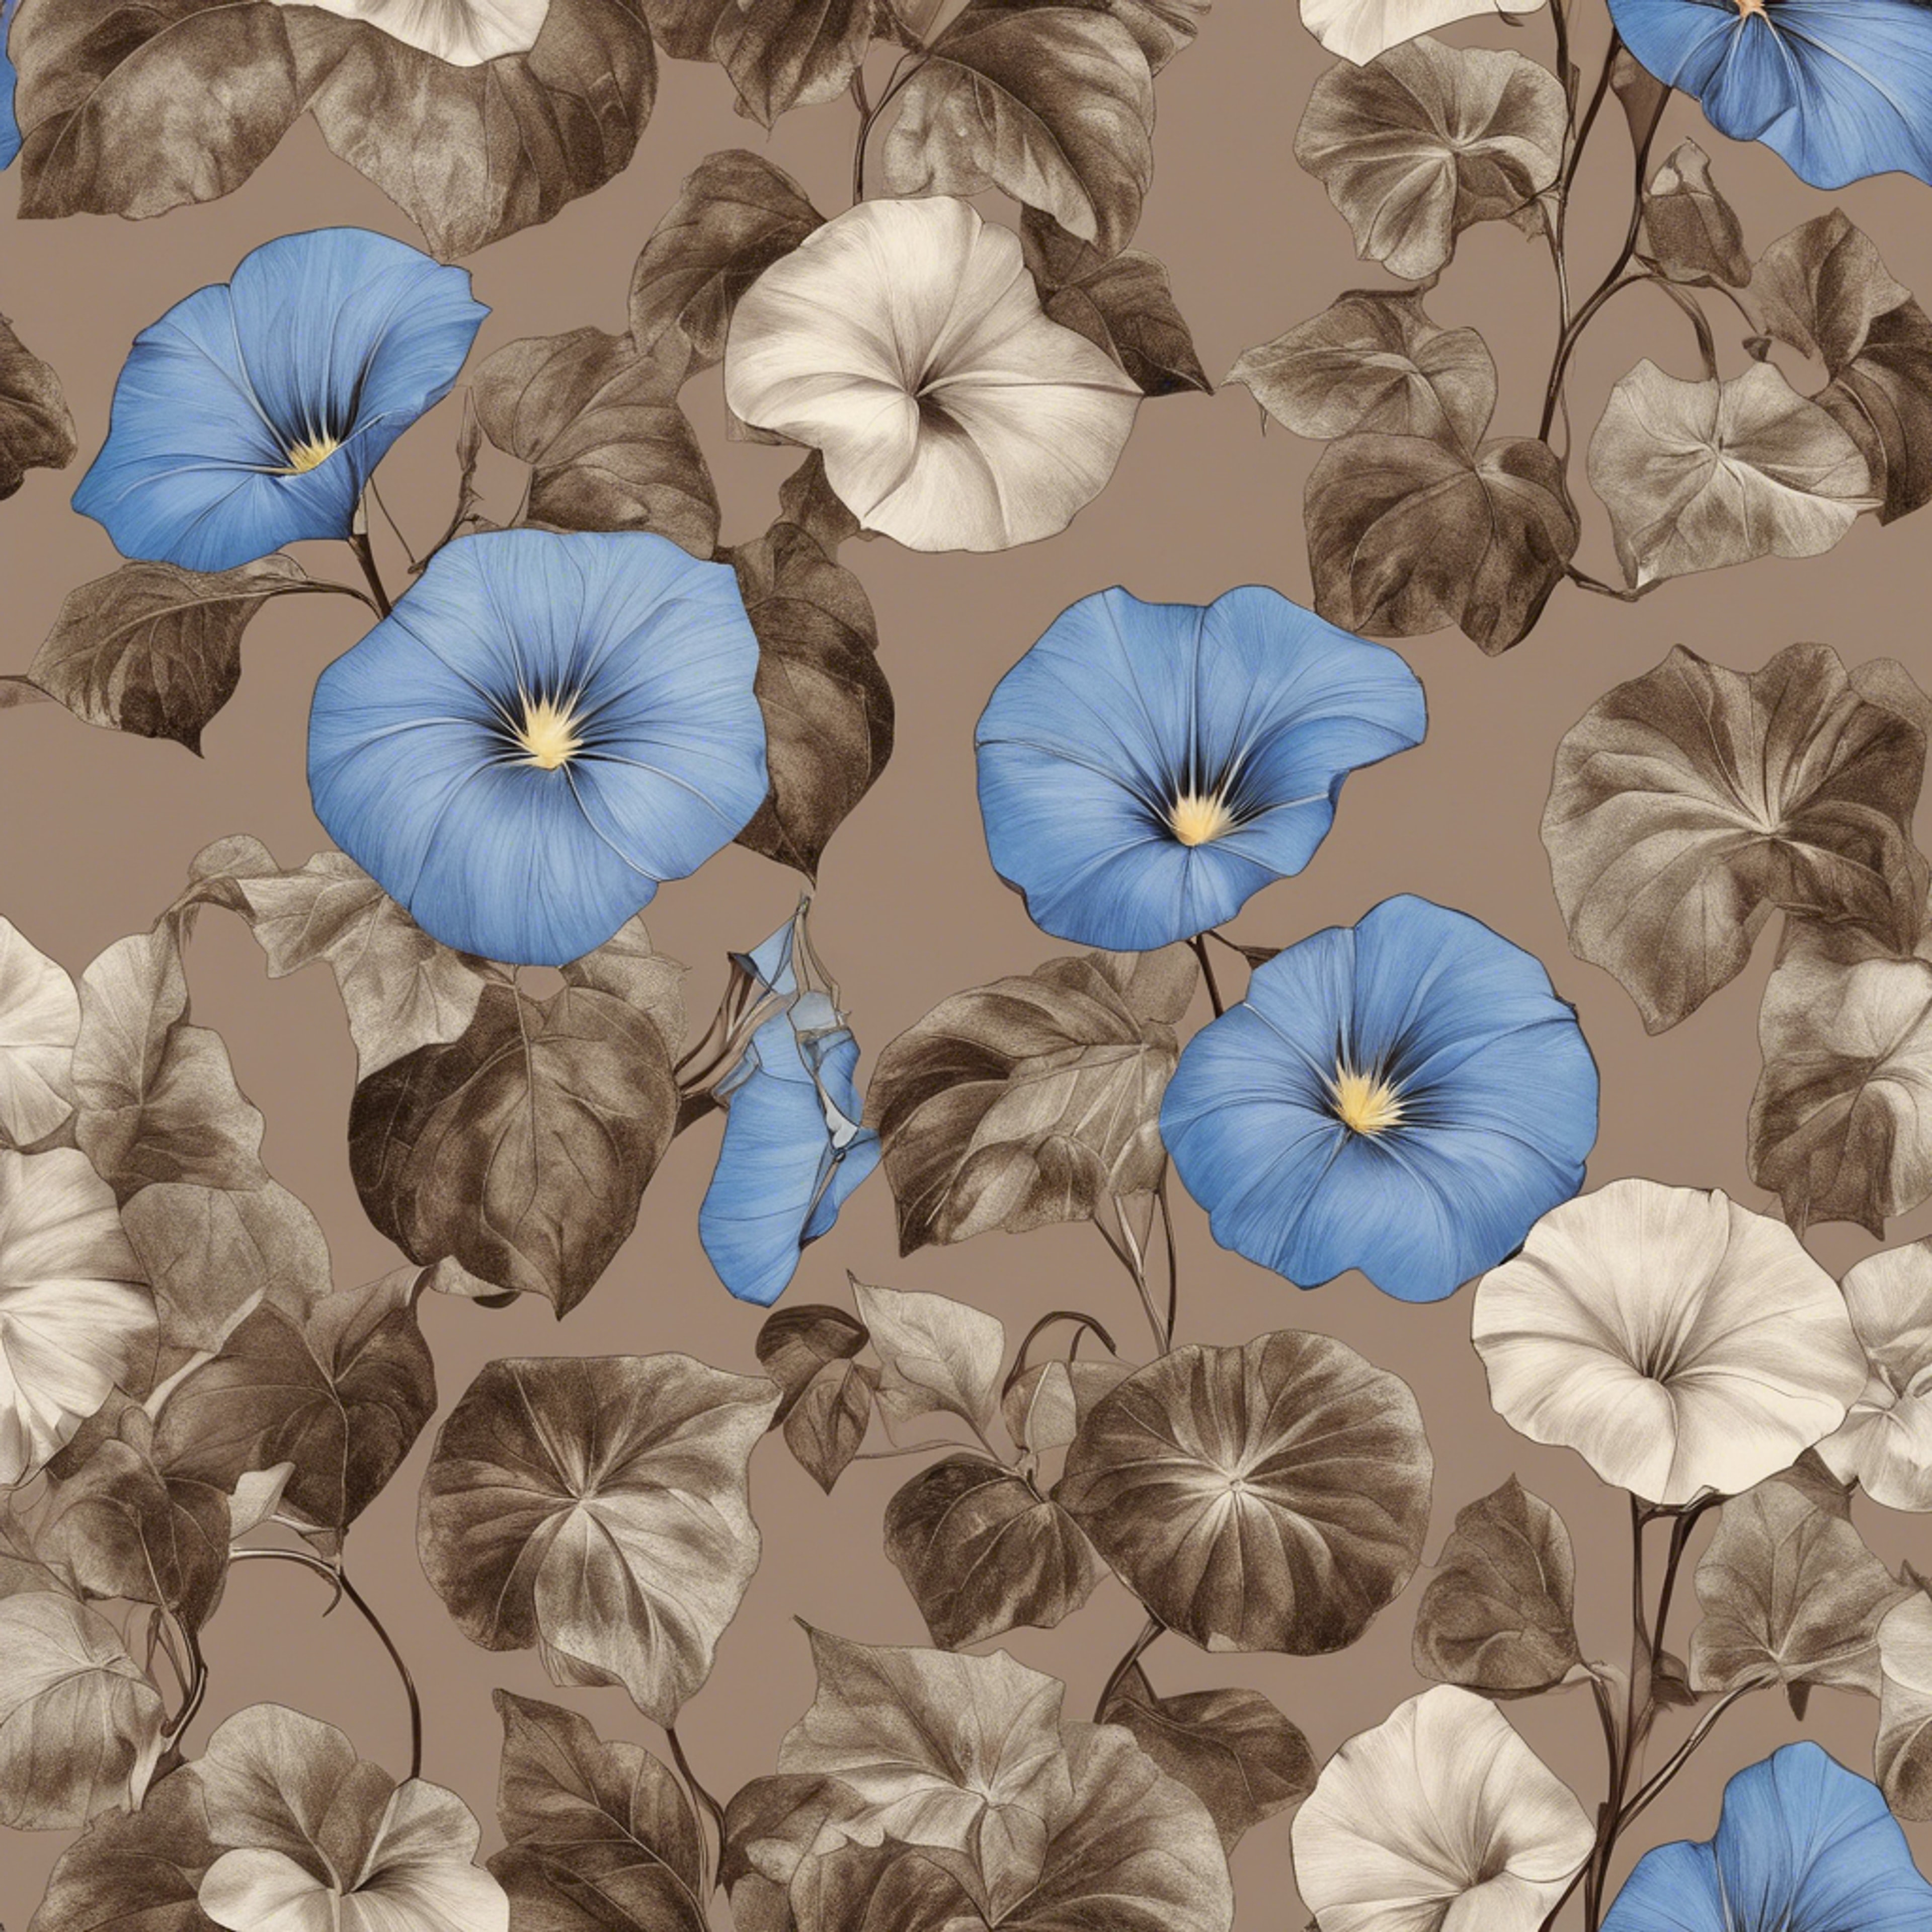 Vintage wallpaper design of nostalgic blue morning glories against a coffee brown backdrop. Behang[8d5b0df35da548e6bc5c]